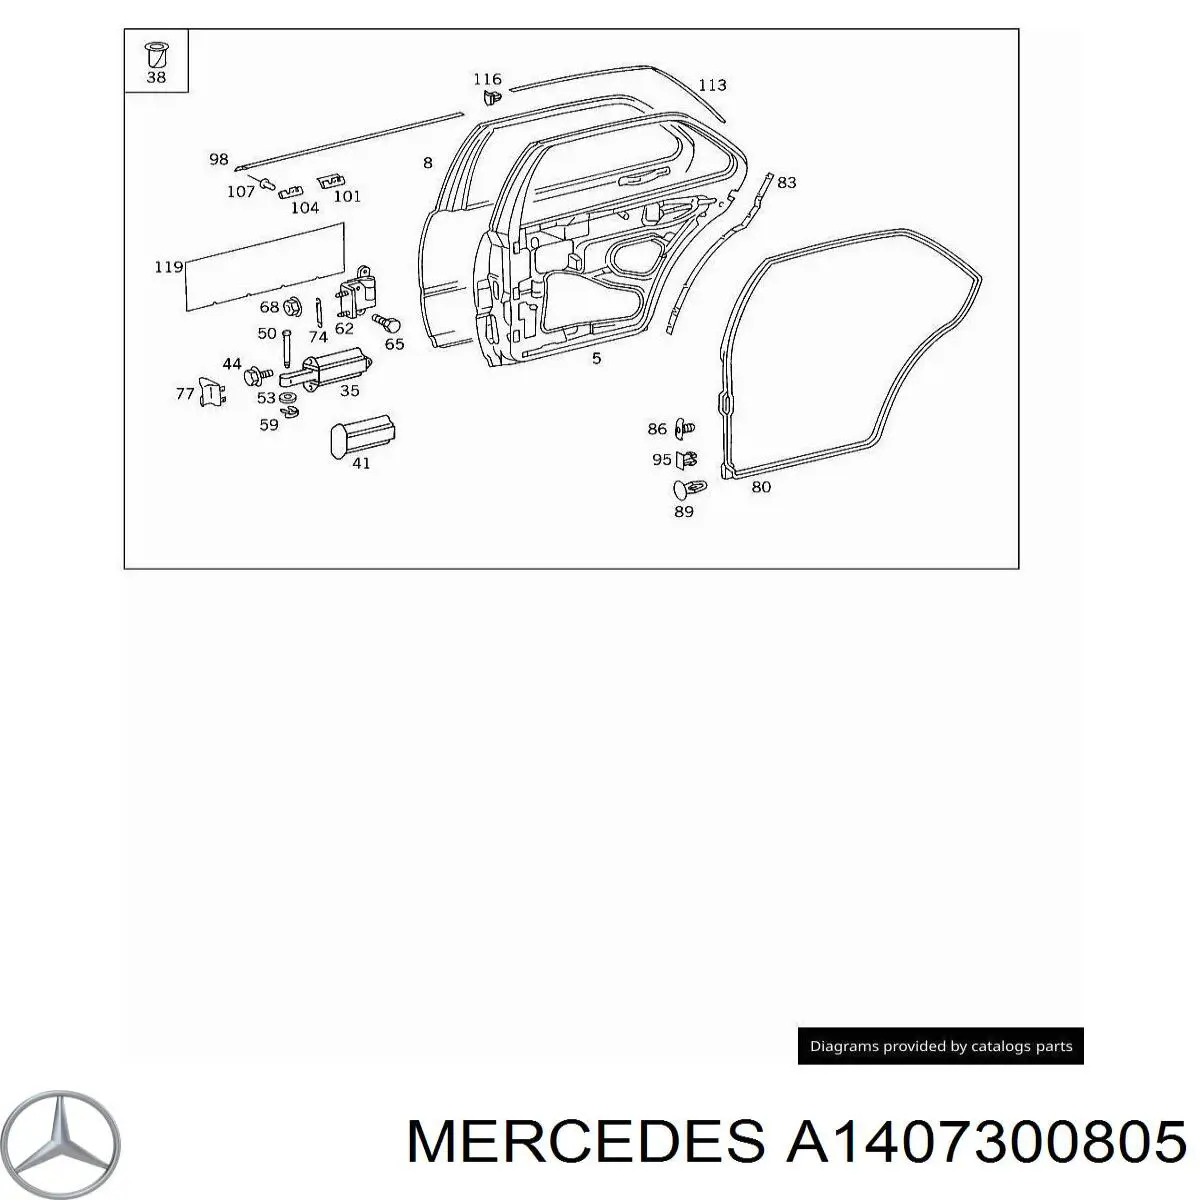 1407300805 Mercedes puerta trasera derecha